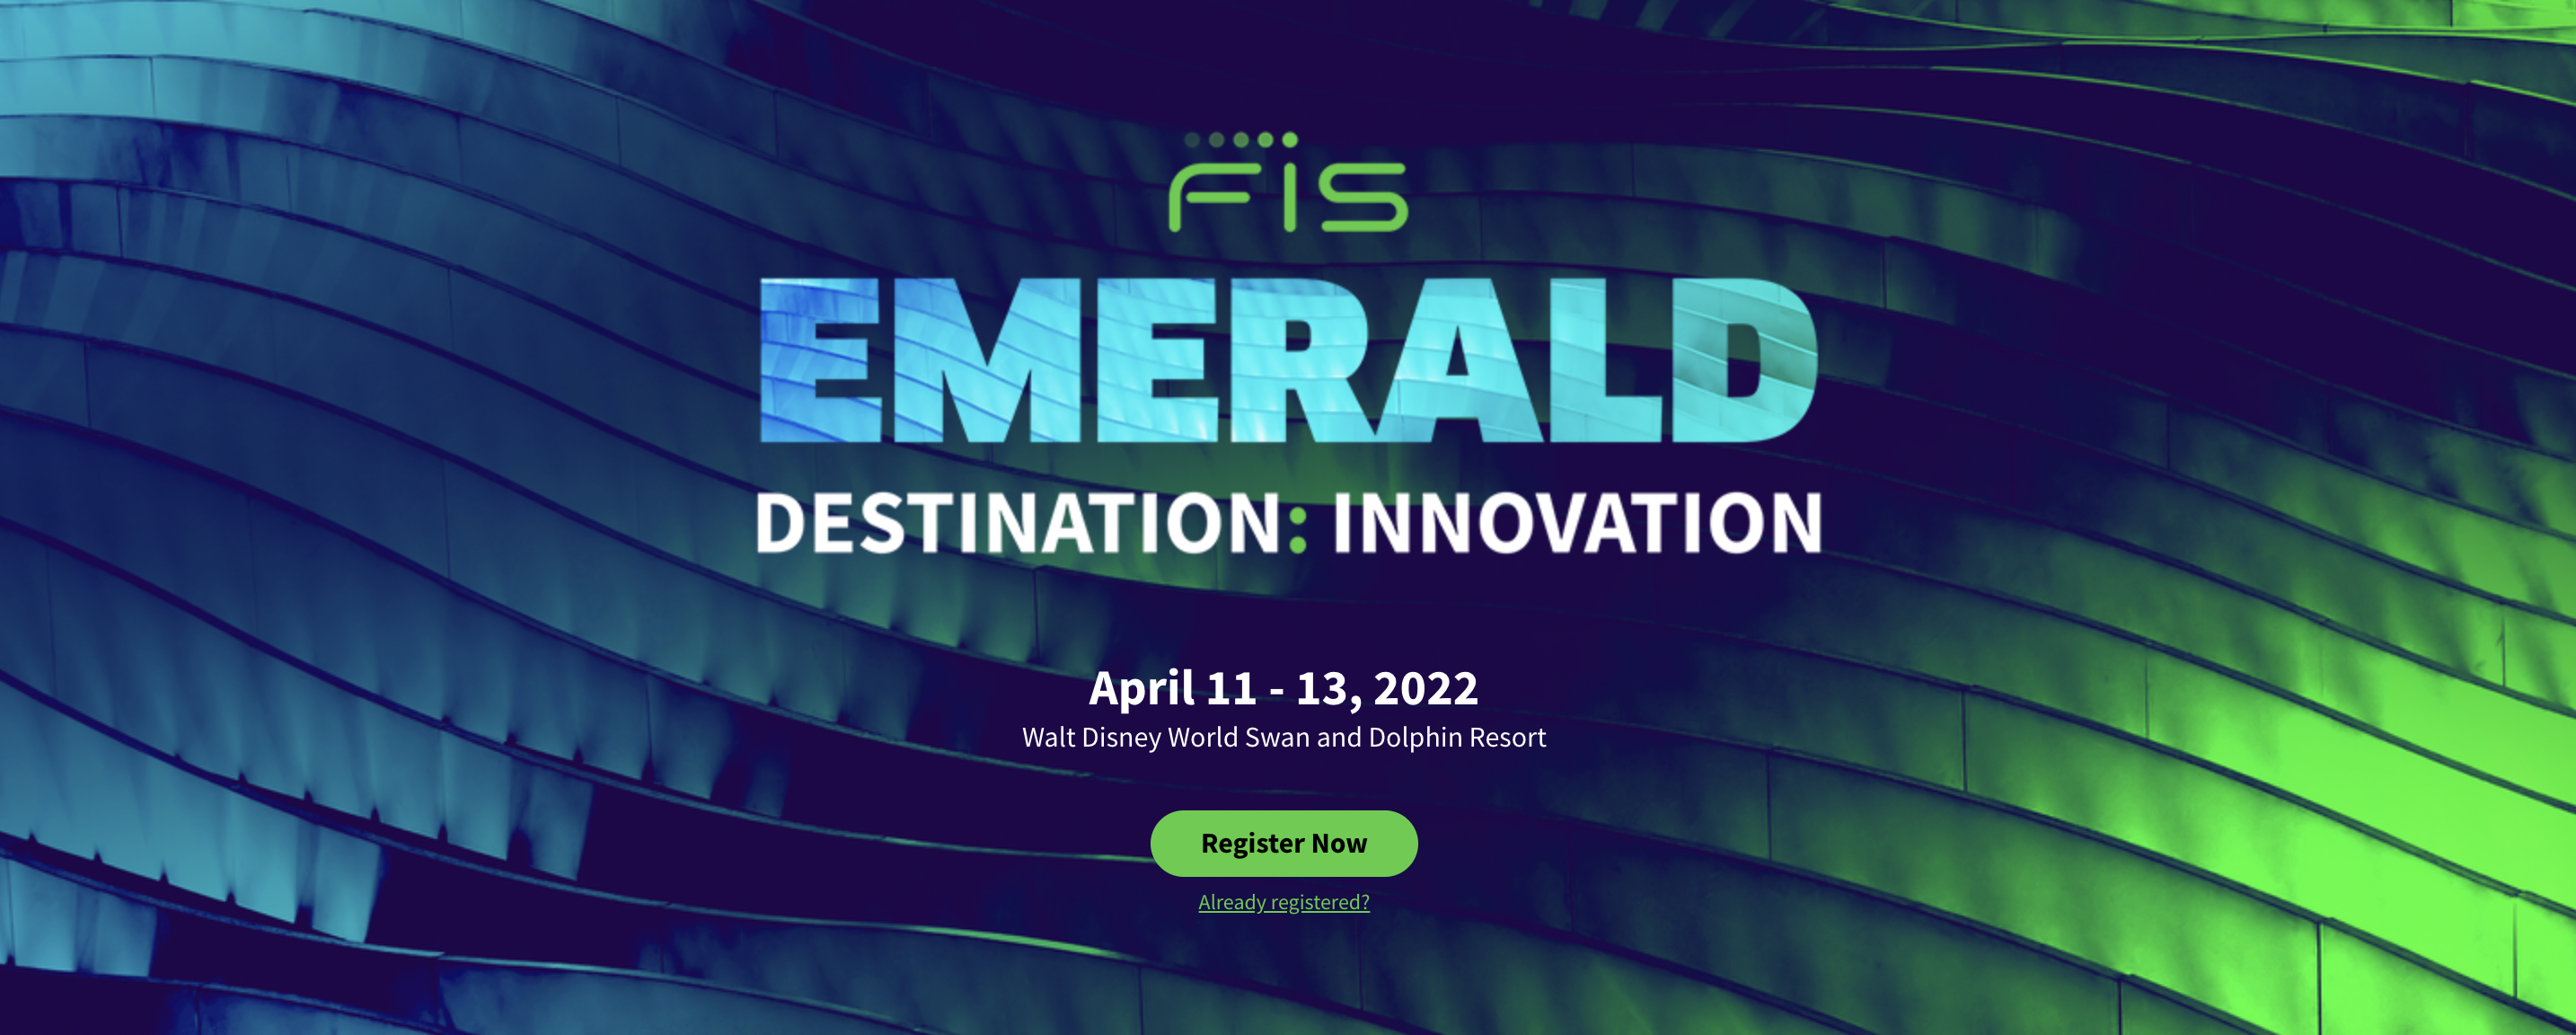 Meet BankiFi at FIS Emerald 2022